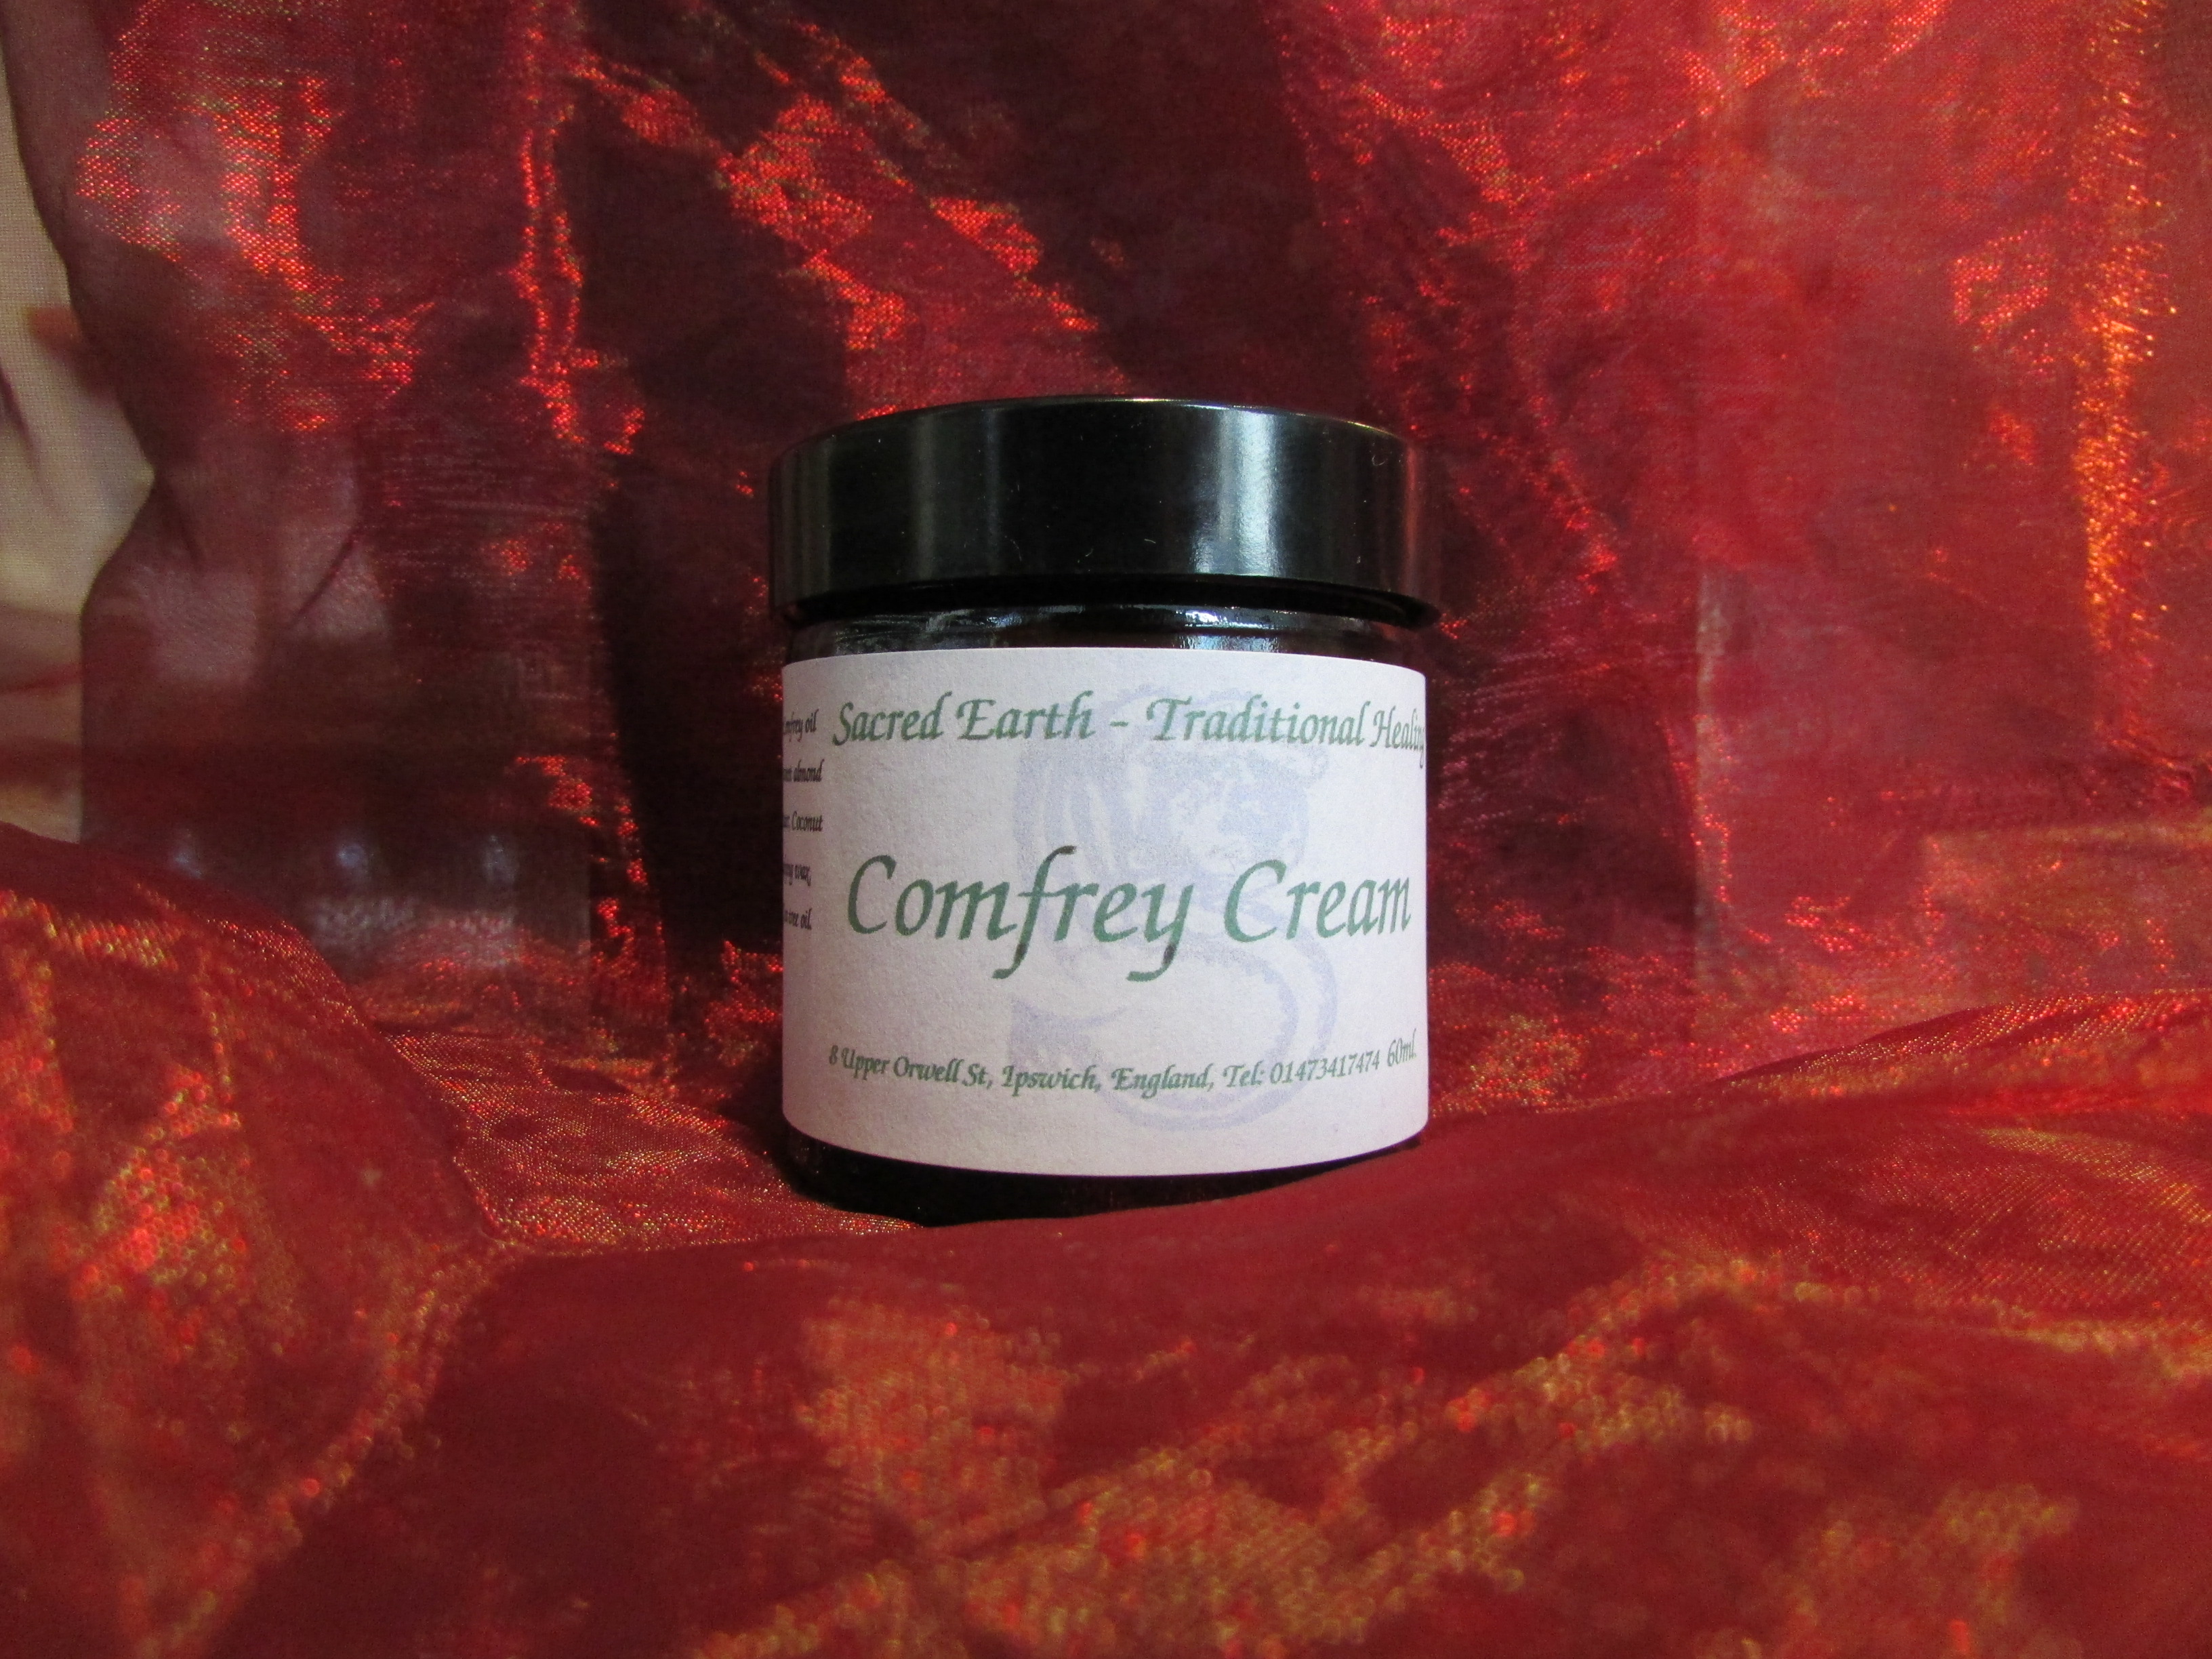 Comfrey Cream